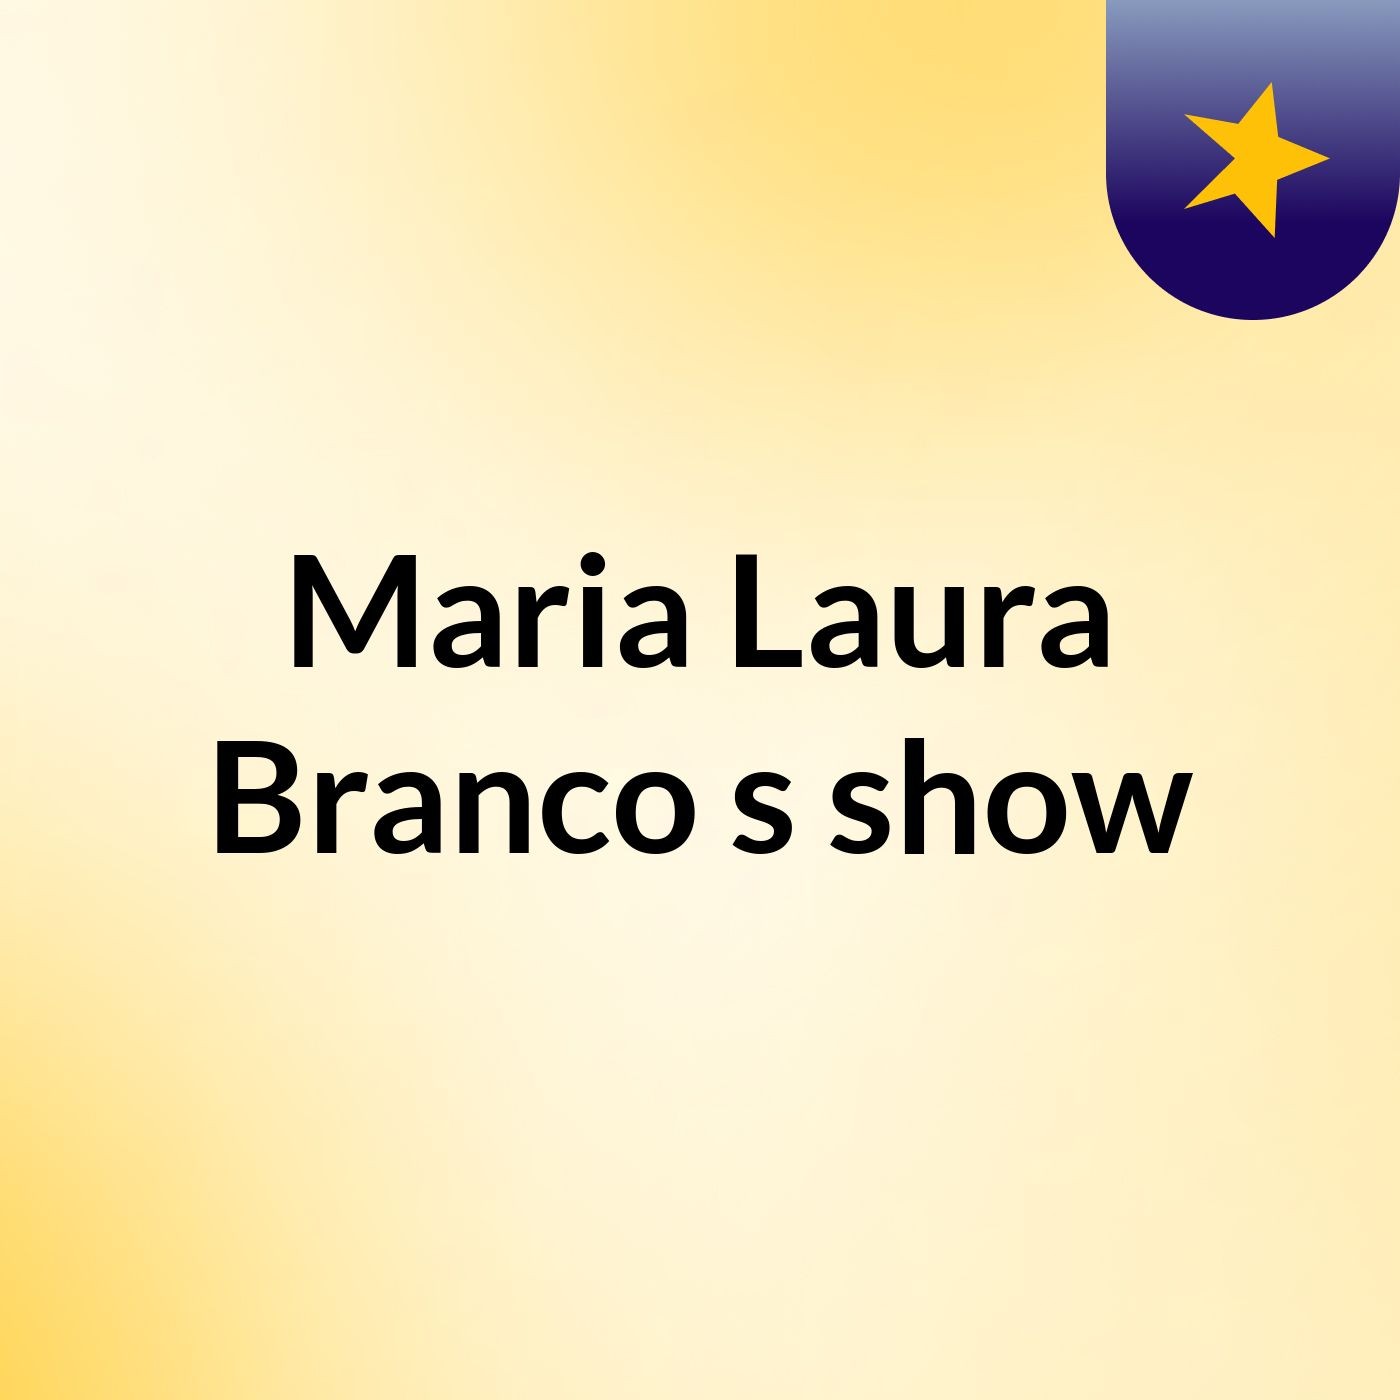 Maria Laura Branco's show